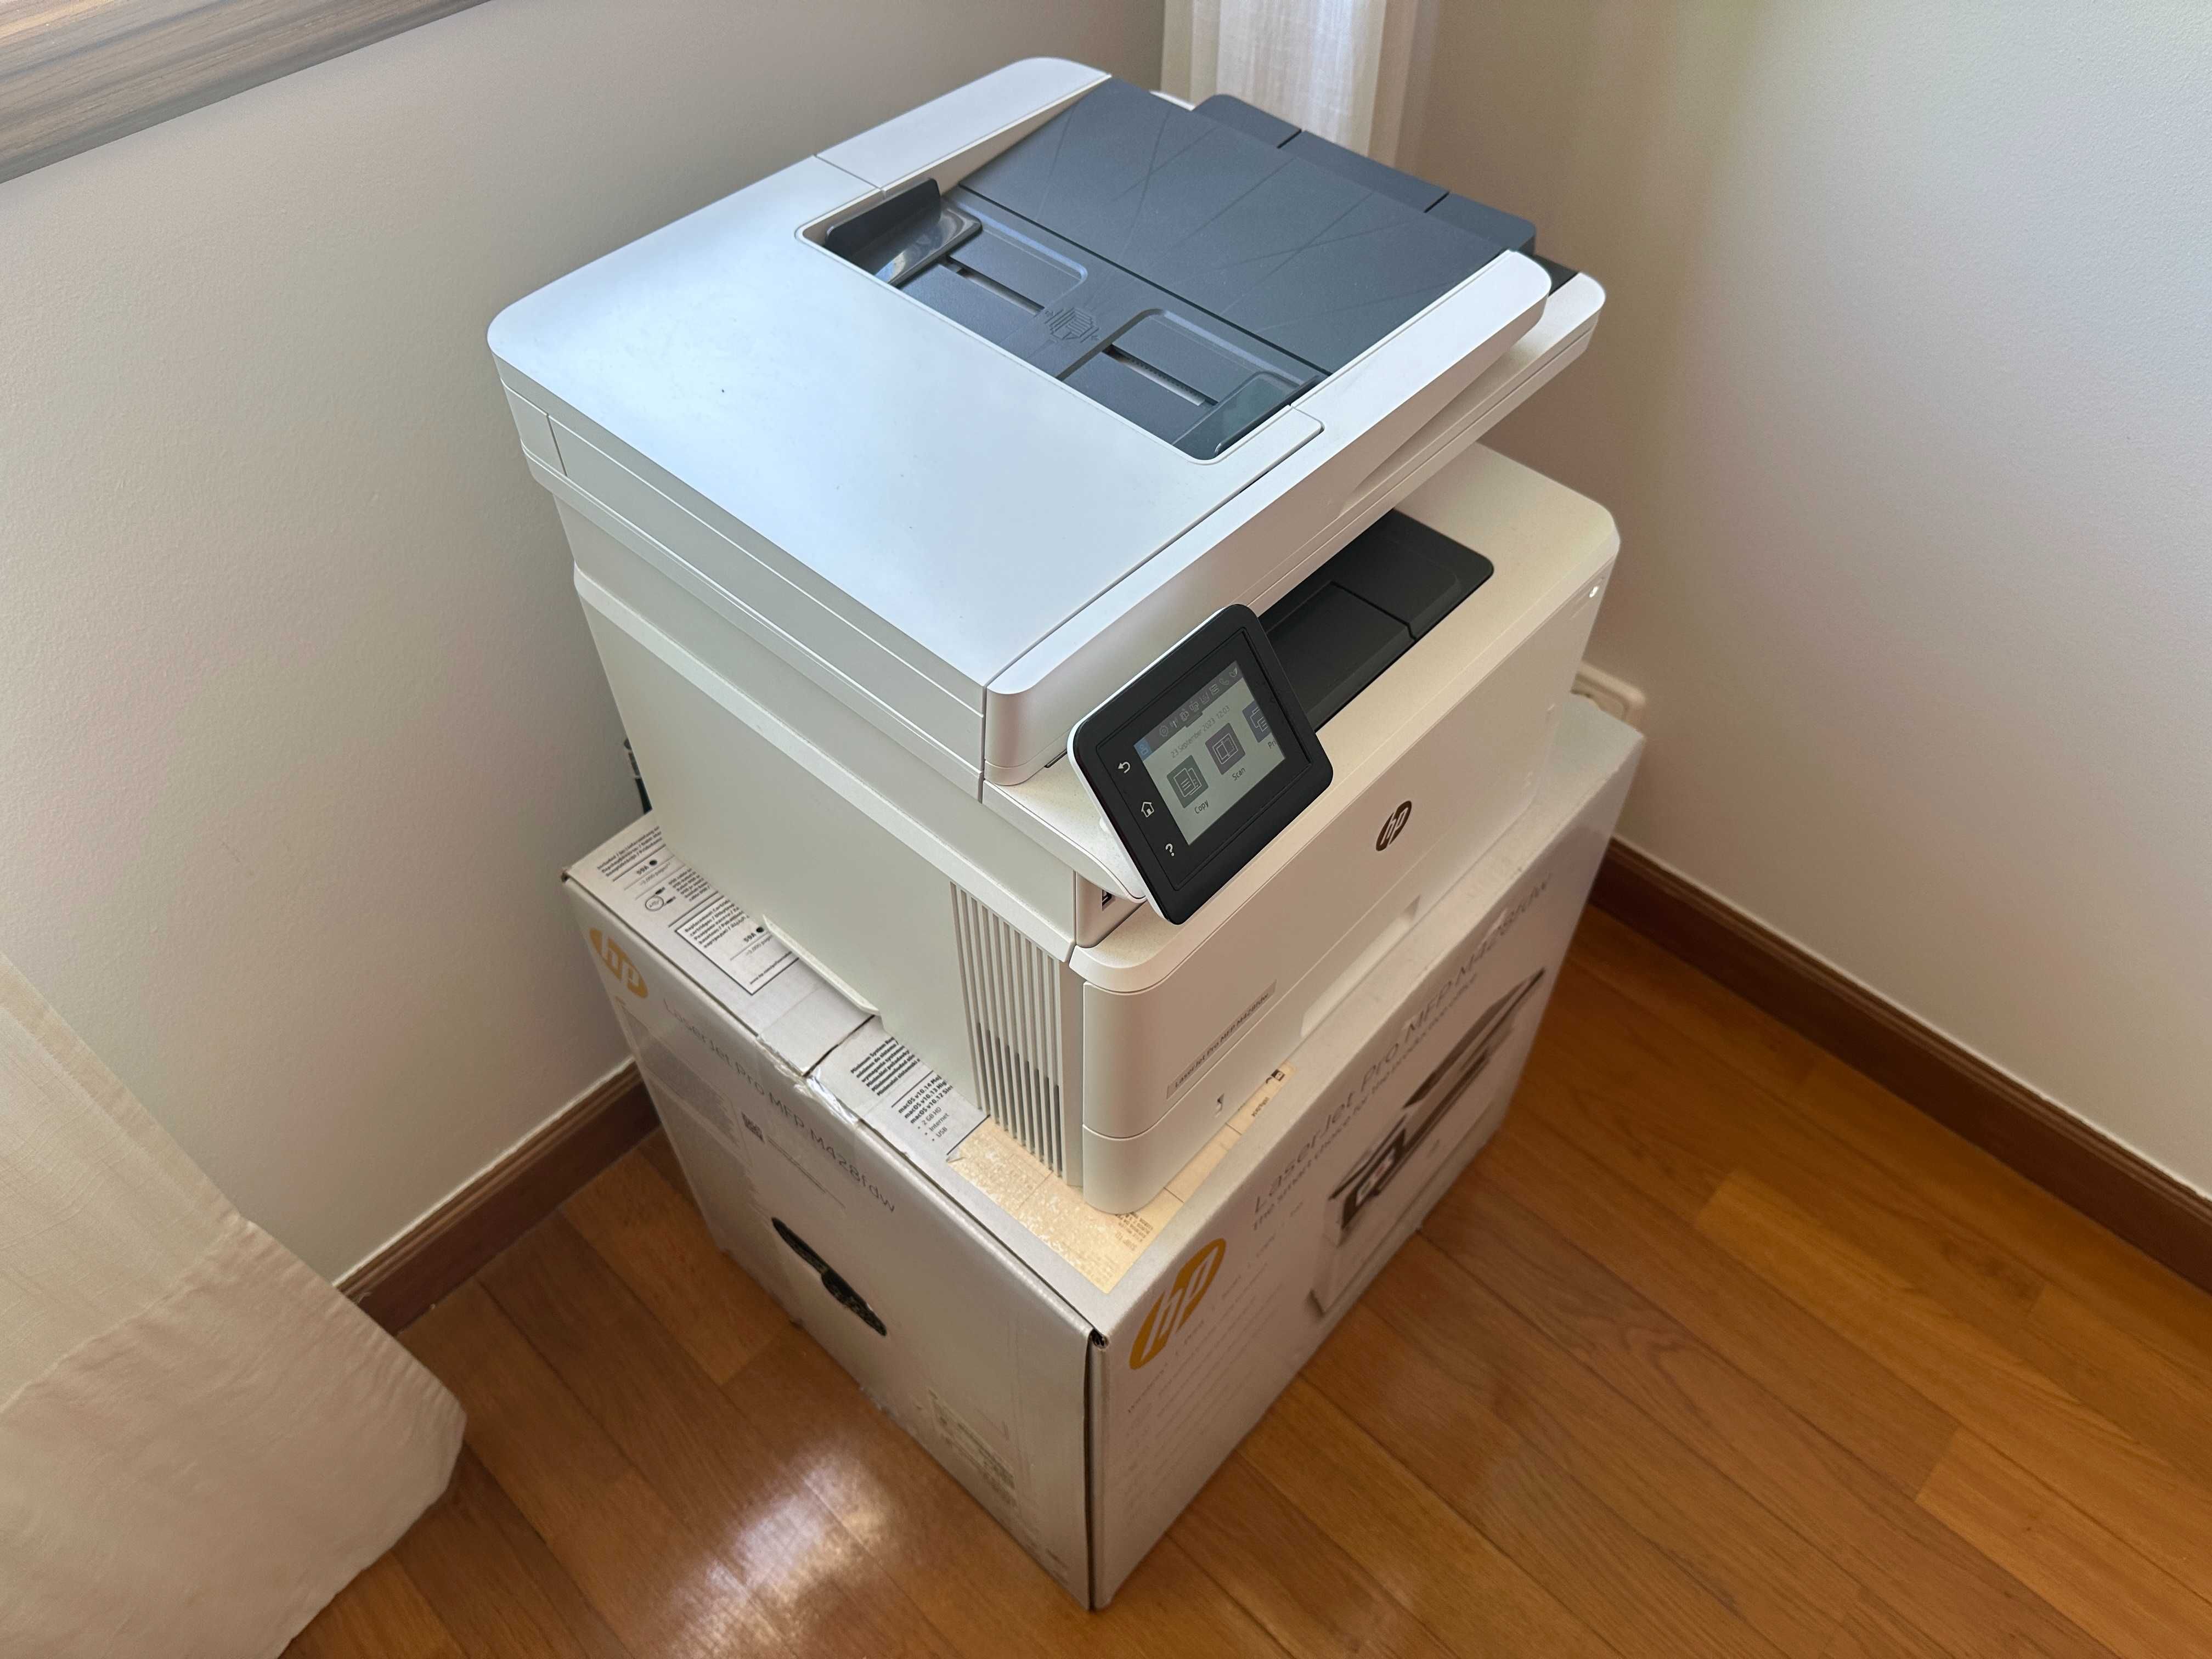 HP LaserJet Pro MFP M428fdw impressora multifunções